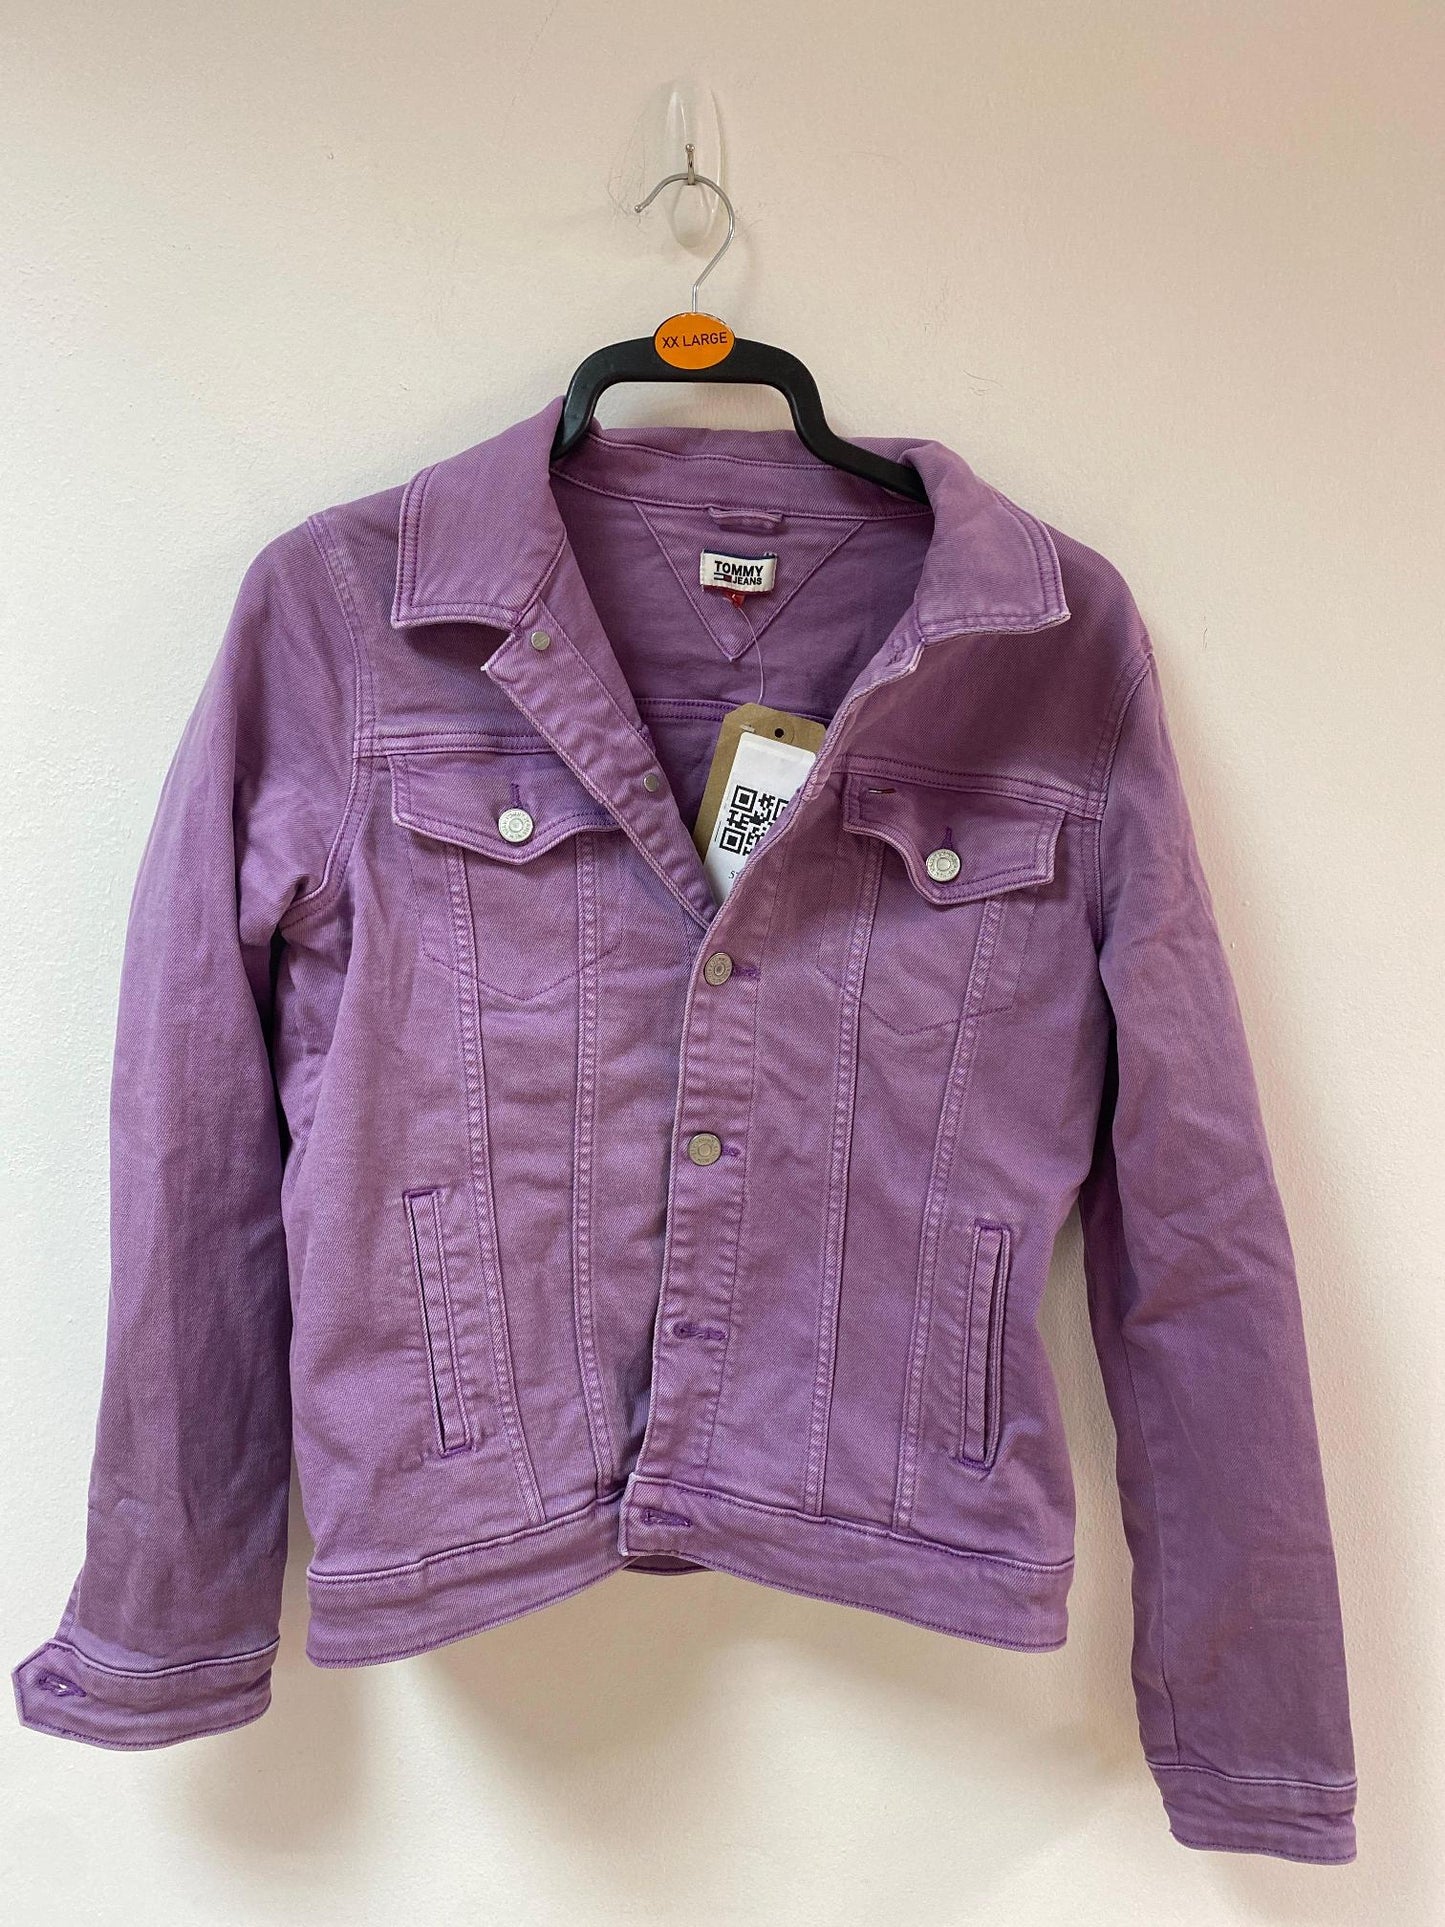 Purple Tommy Hilfiger denim jacket, size L